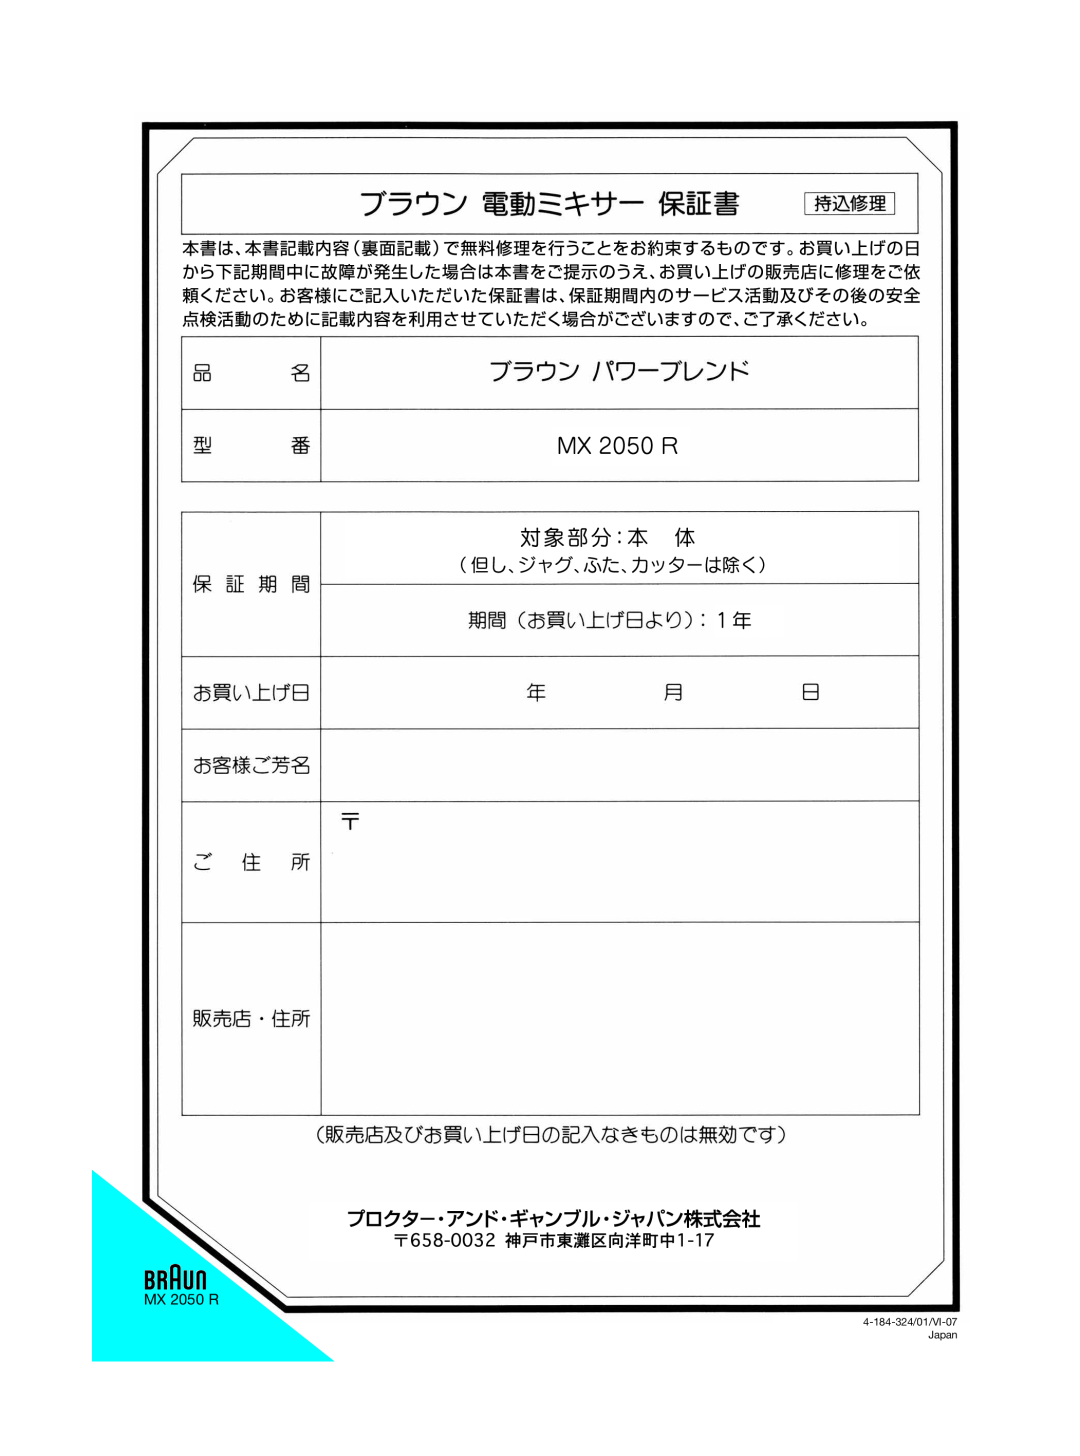 Braun MX 2050 R manual 4-184-324/01/VI-07Japan 